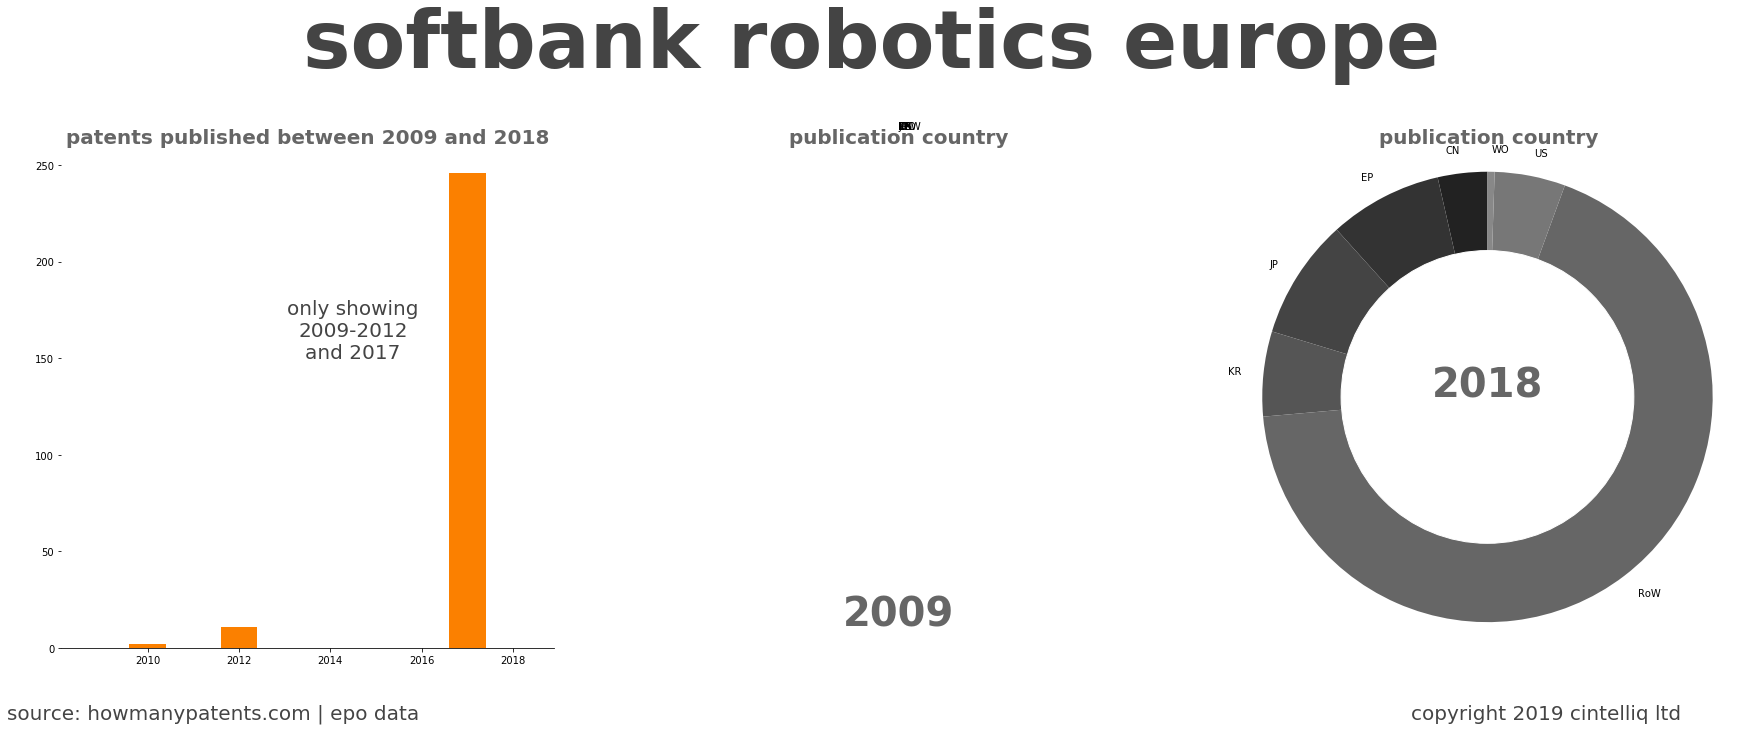 summary of patents for Softbank Robotics Europe